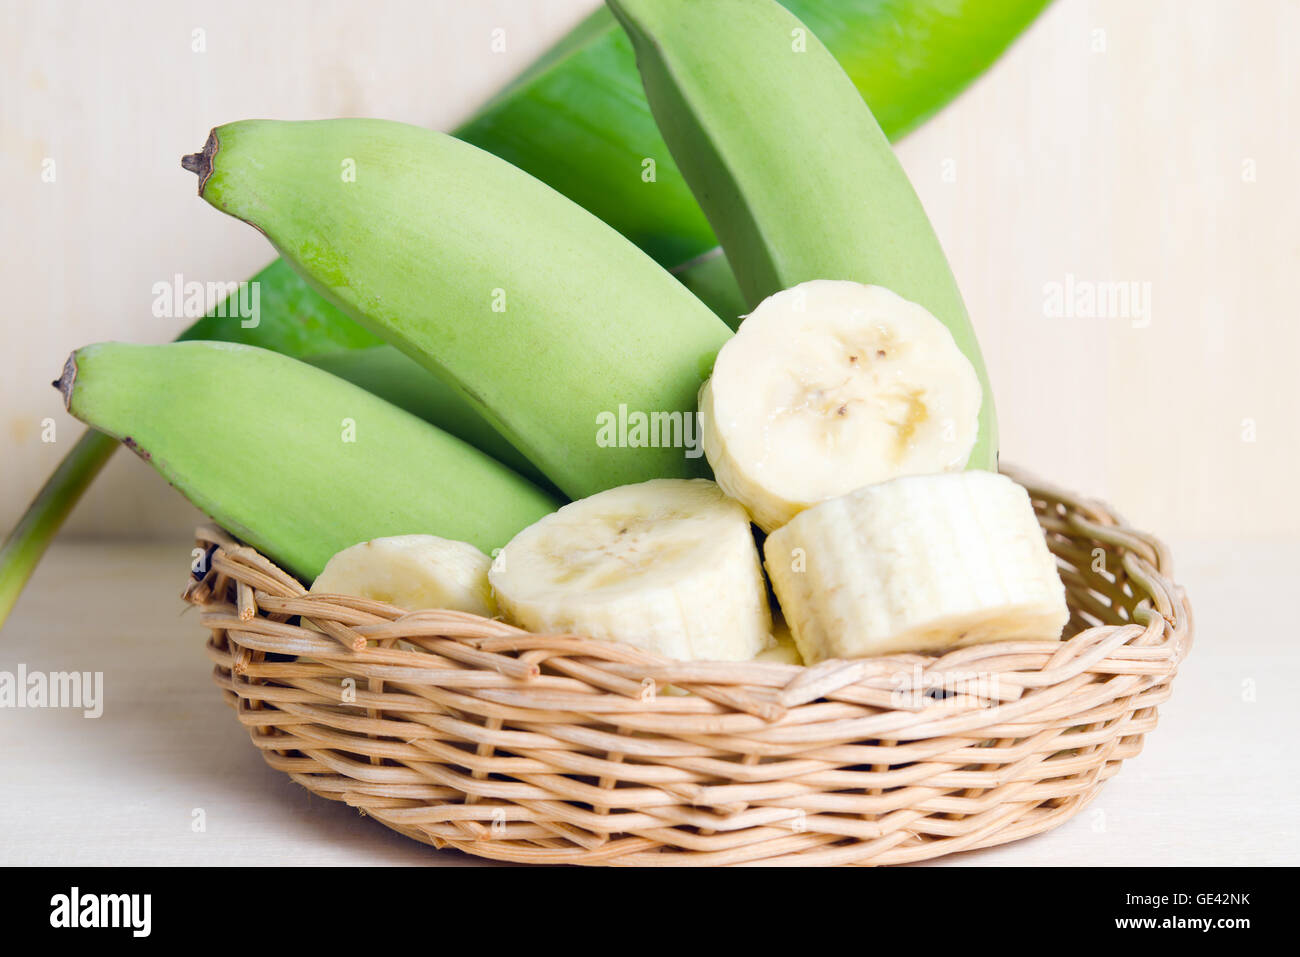 Banana (Other names are Musa acuminata, Musa balbisiana, and Musa x paradisiaca) fruit with banana leaf on basket Stock Photo